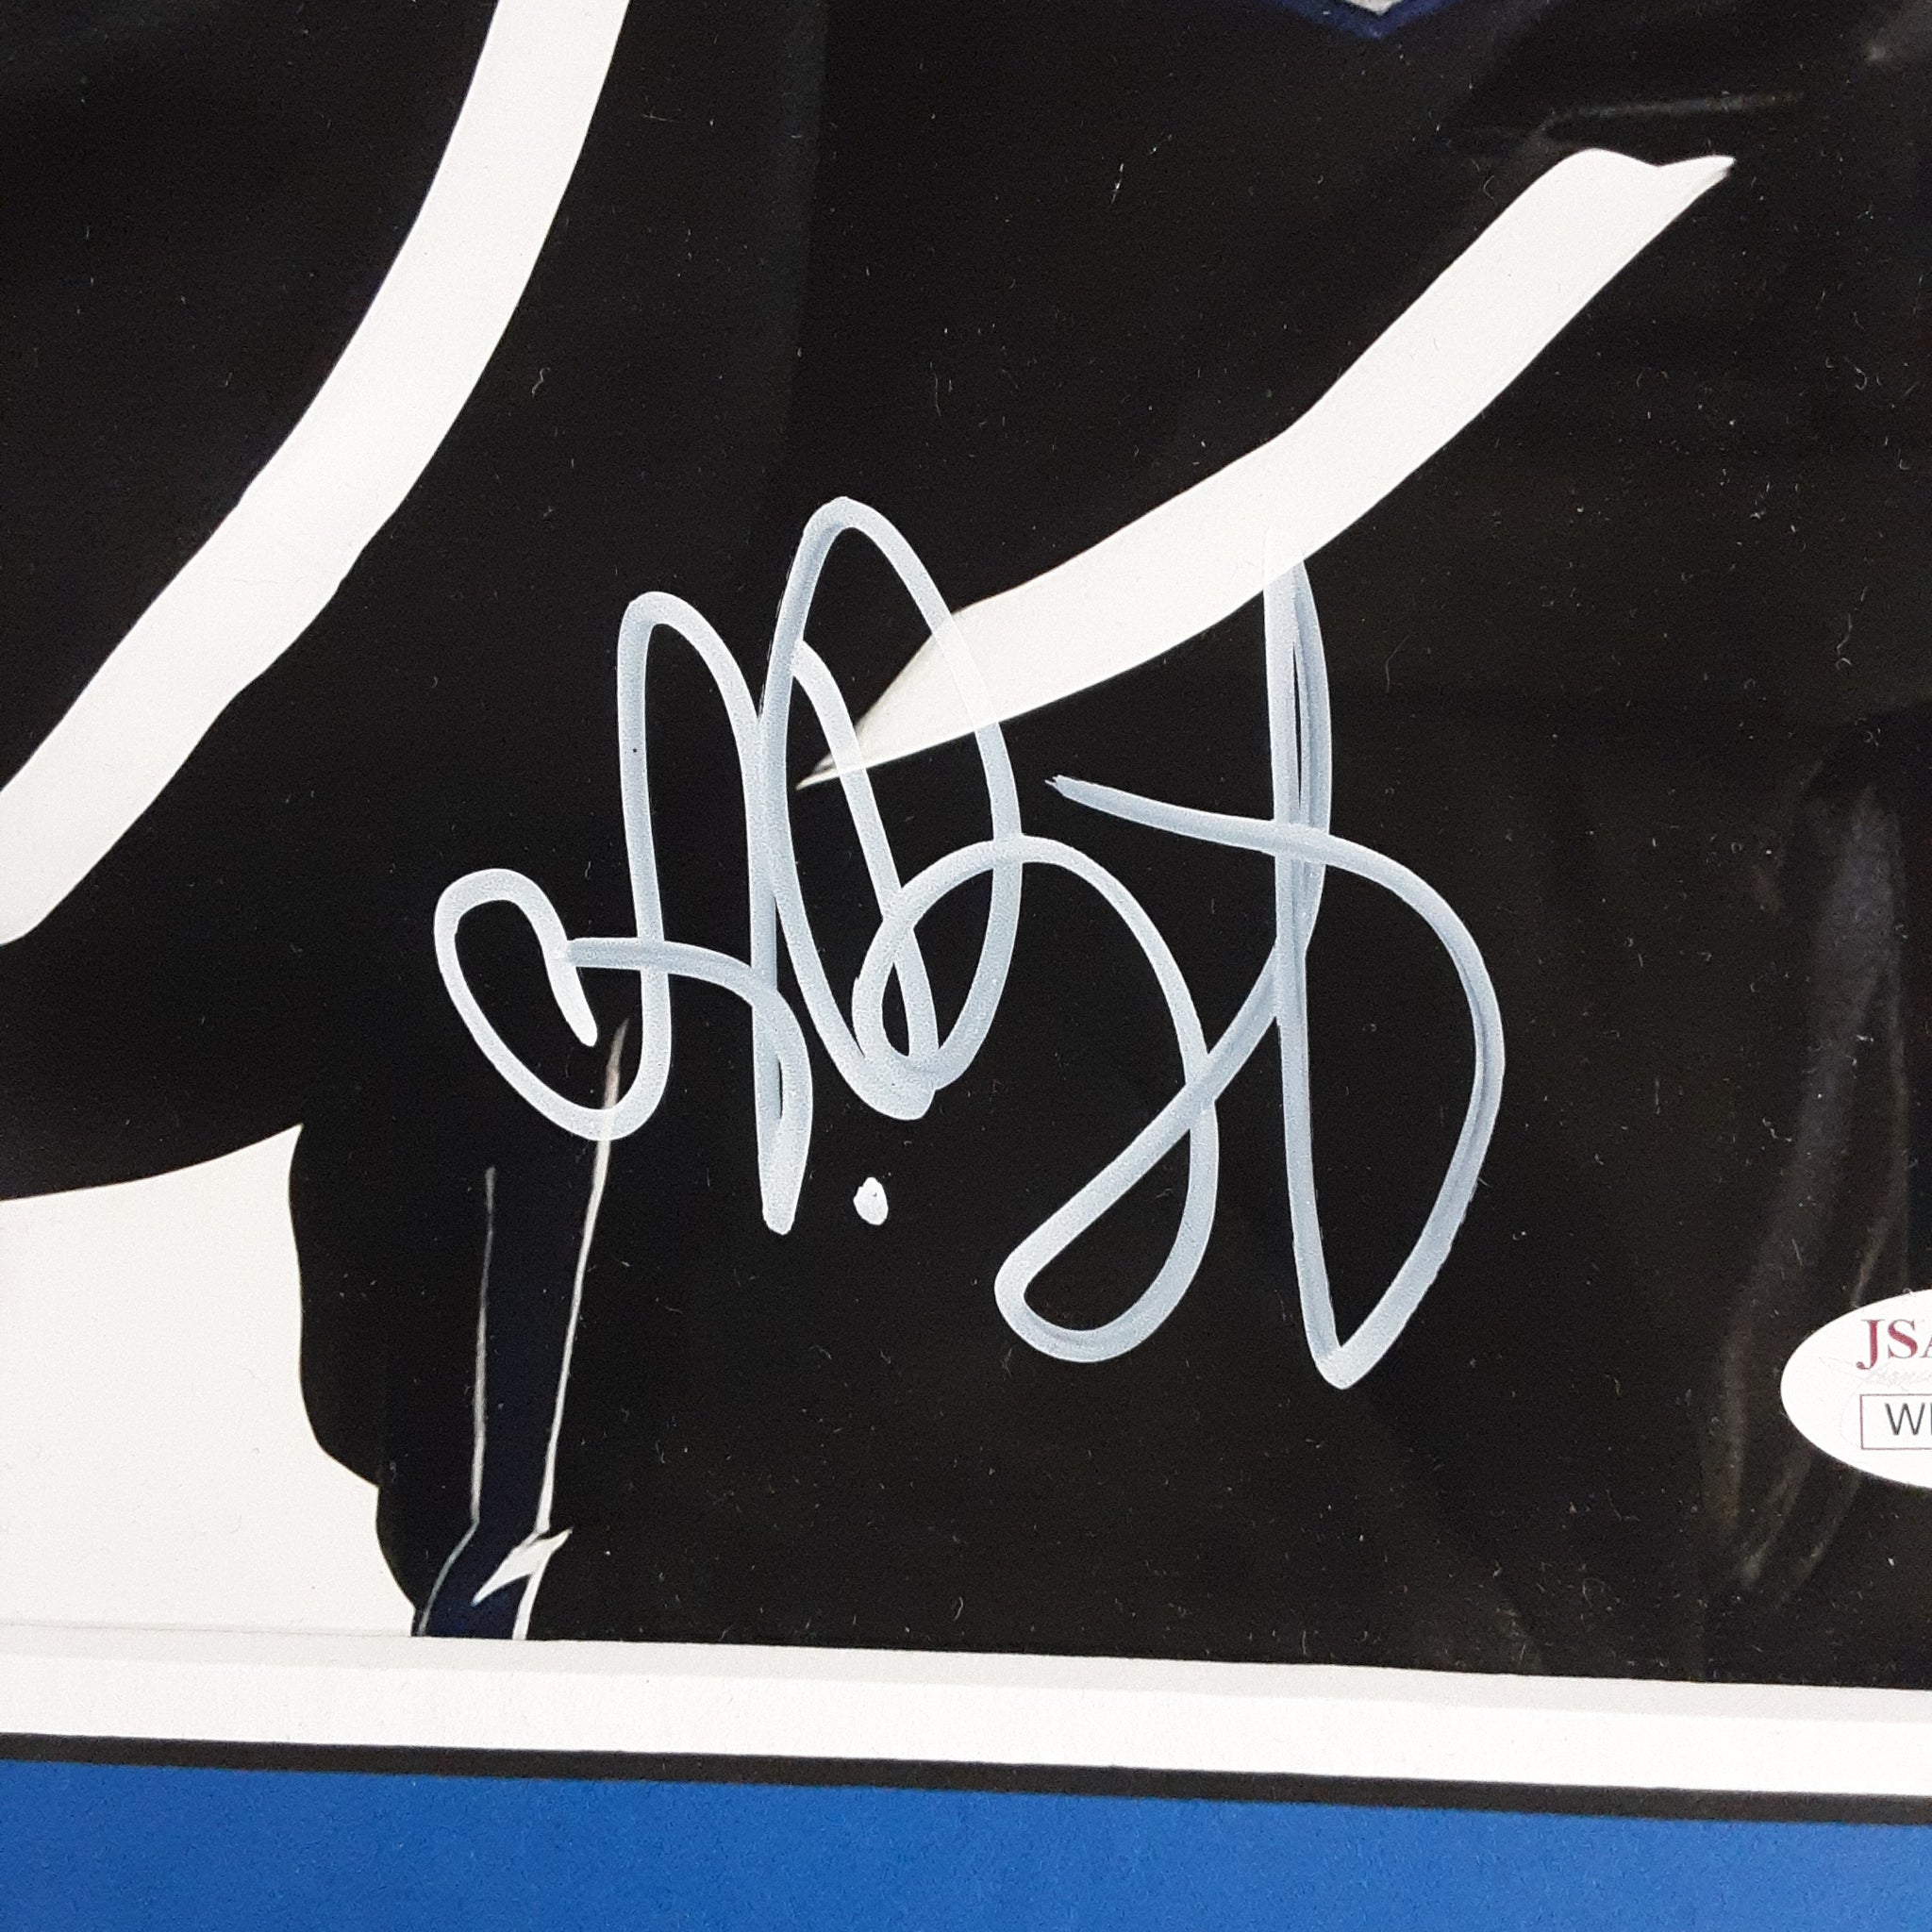 Andrei Vasilevskiy and Nikita Kucherov Authentic Signed Framed 11x14 Photo Autographed JSA